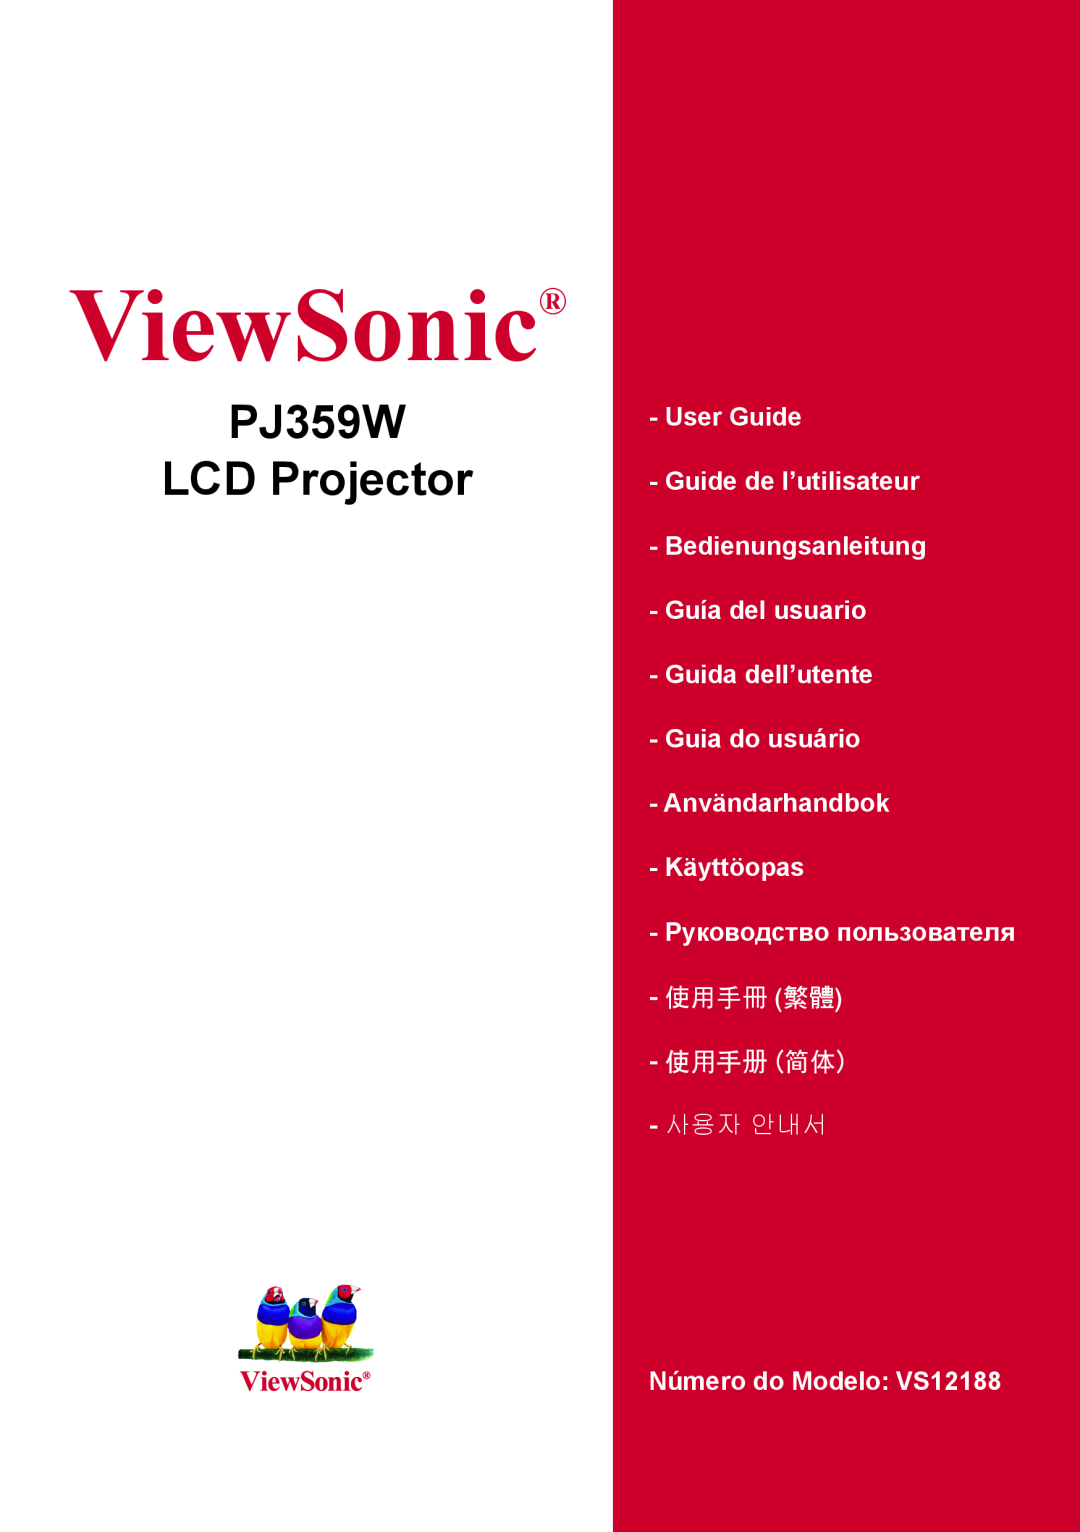 ViewSonic manual PJ359W LCD Projector, ViewSonic, User Guide Guide de l’utilisateur Bedienungsanleitung, 사용자 안내서 